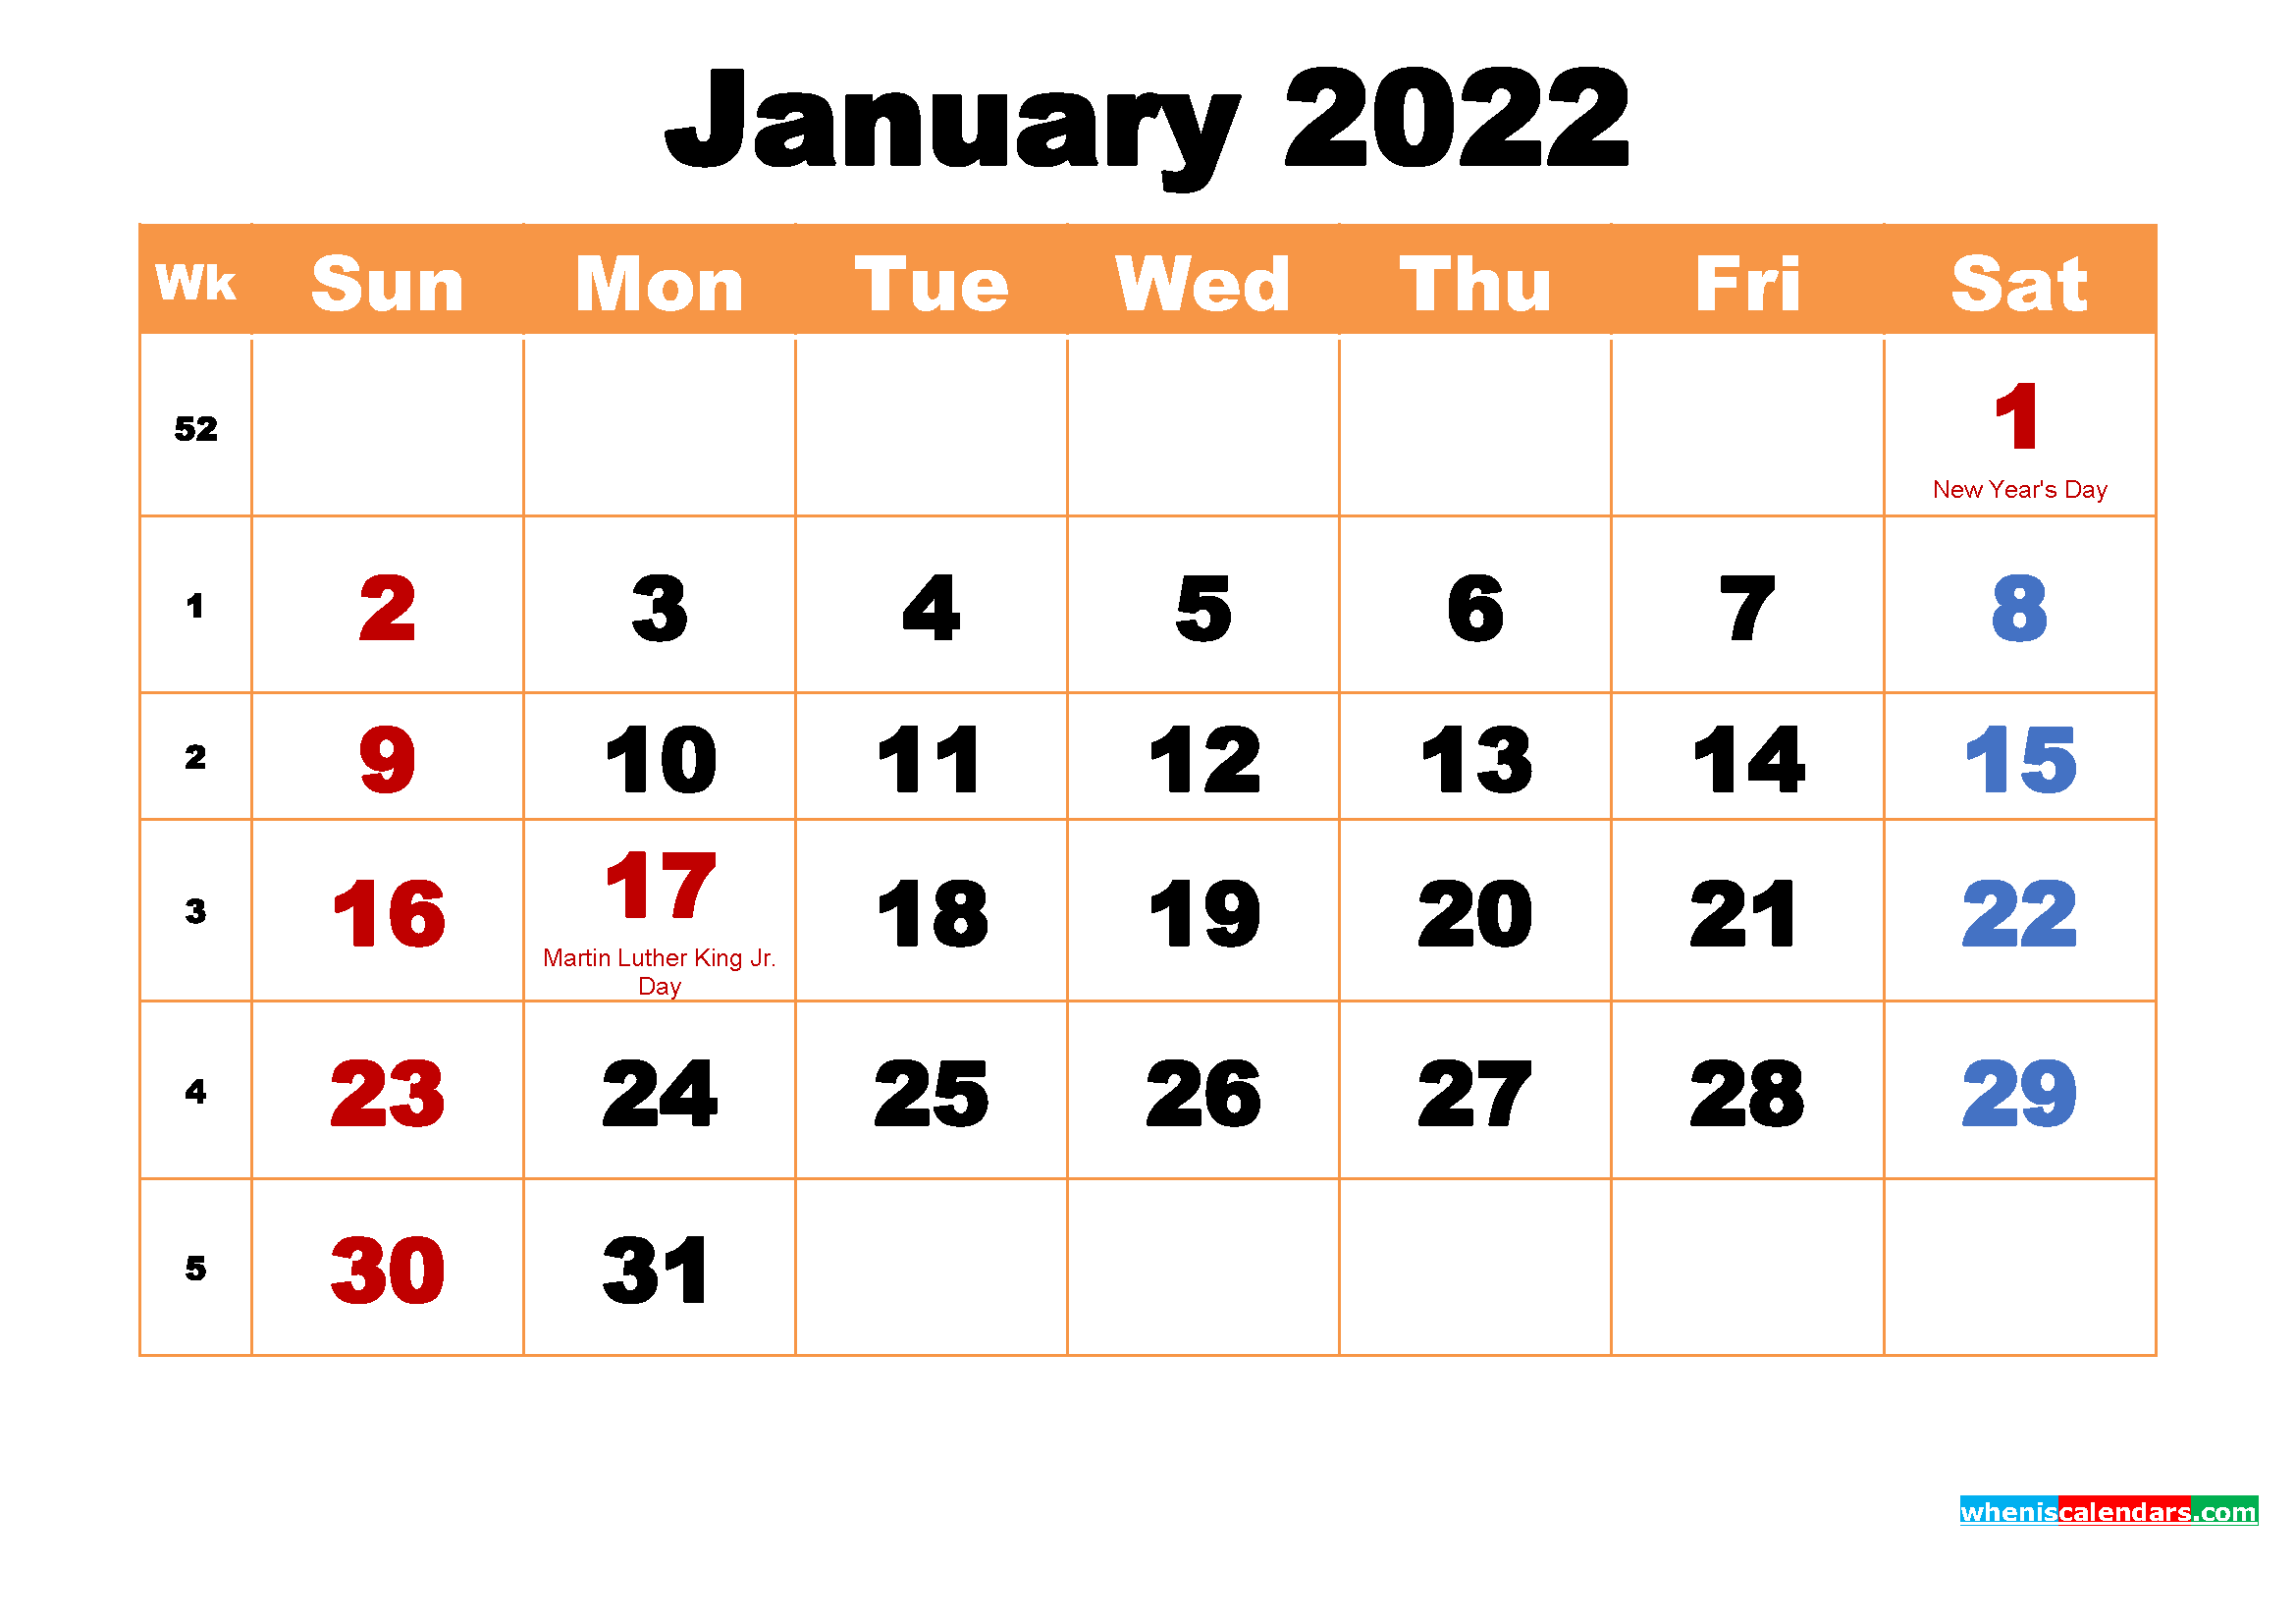 January 2022 Calendar Wallpapers High Resolution